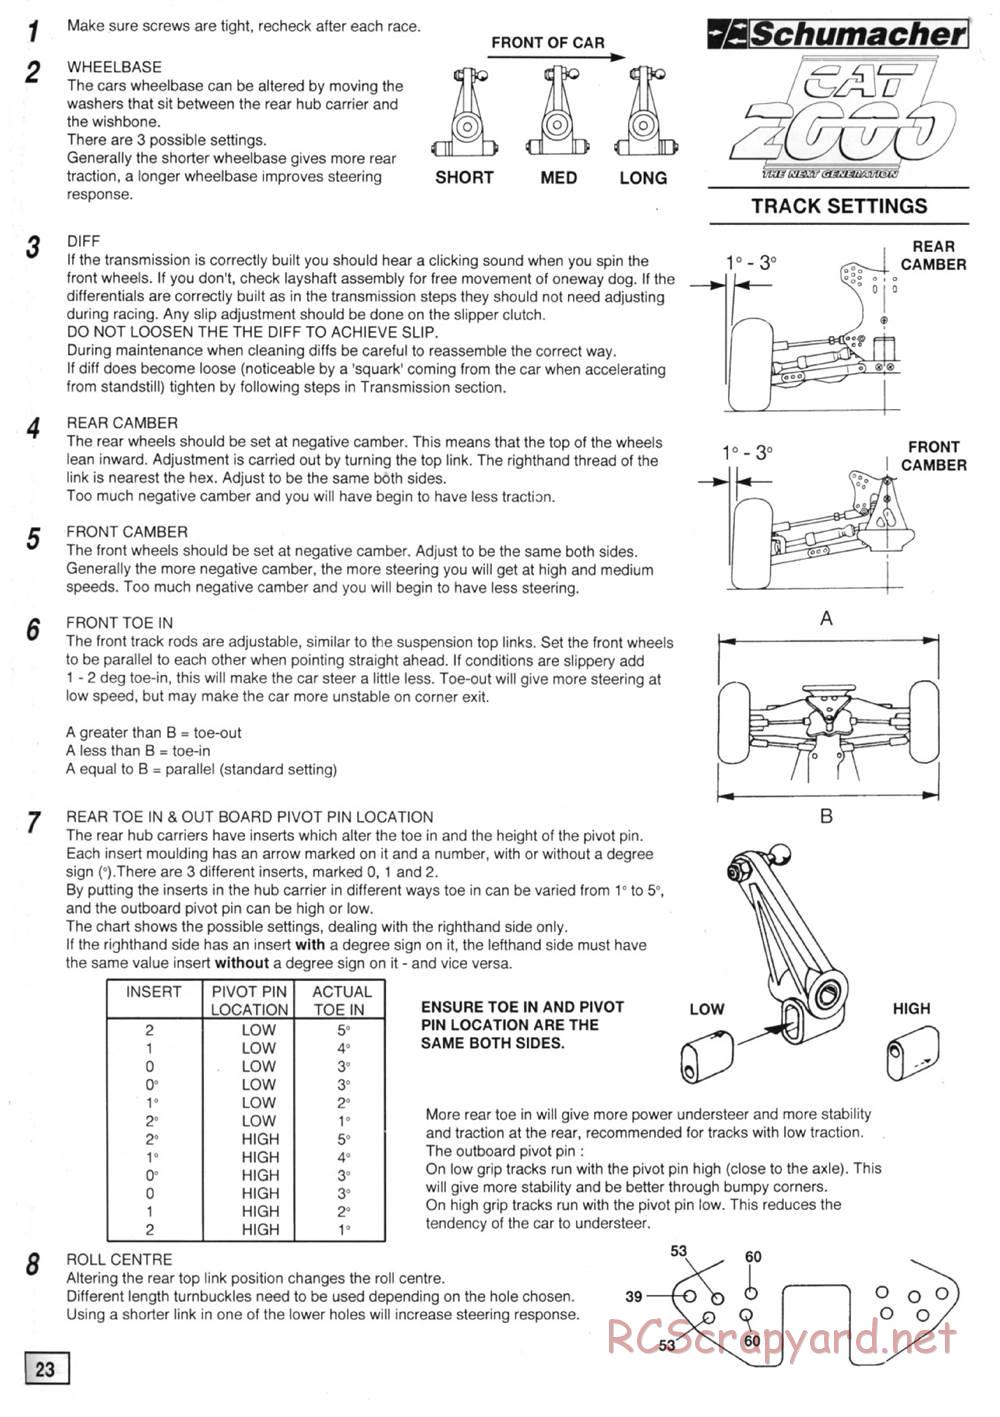 Schumacher - Cat 2000 - Manual - Page 29